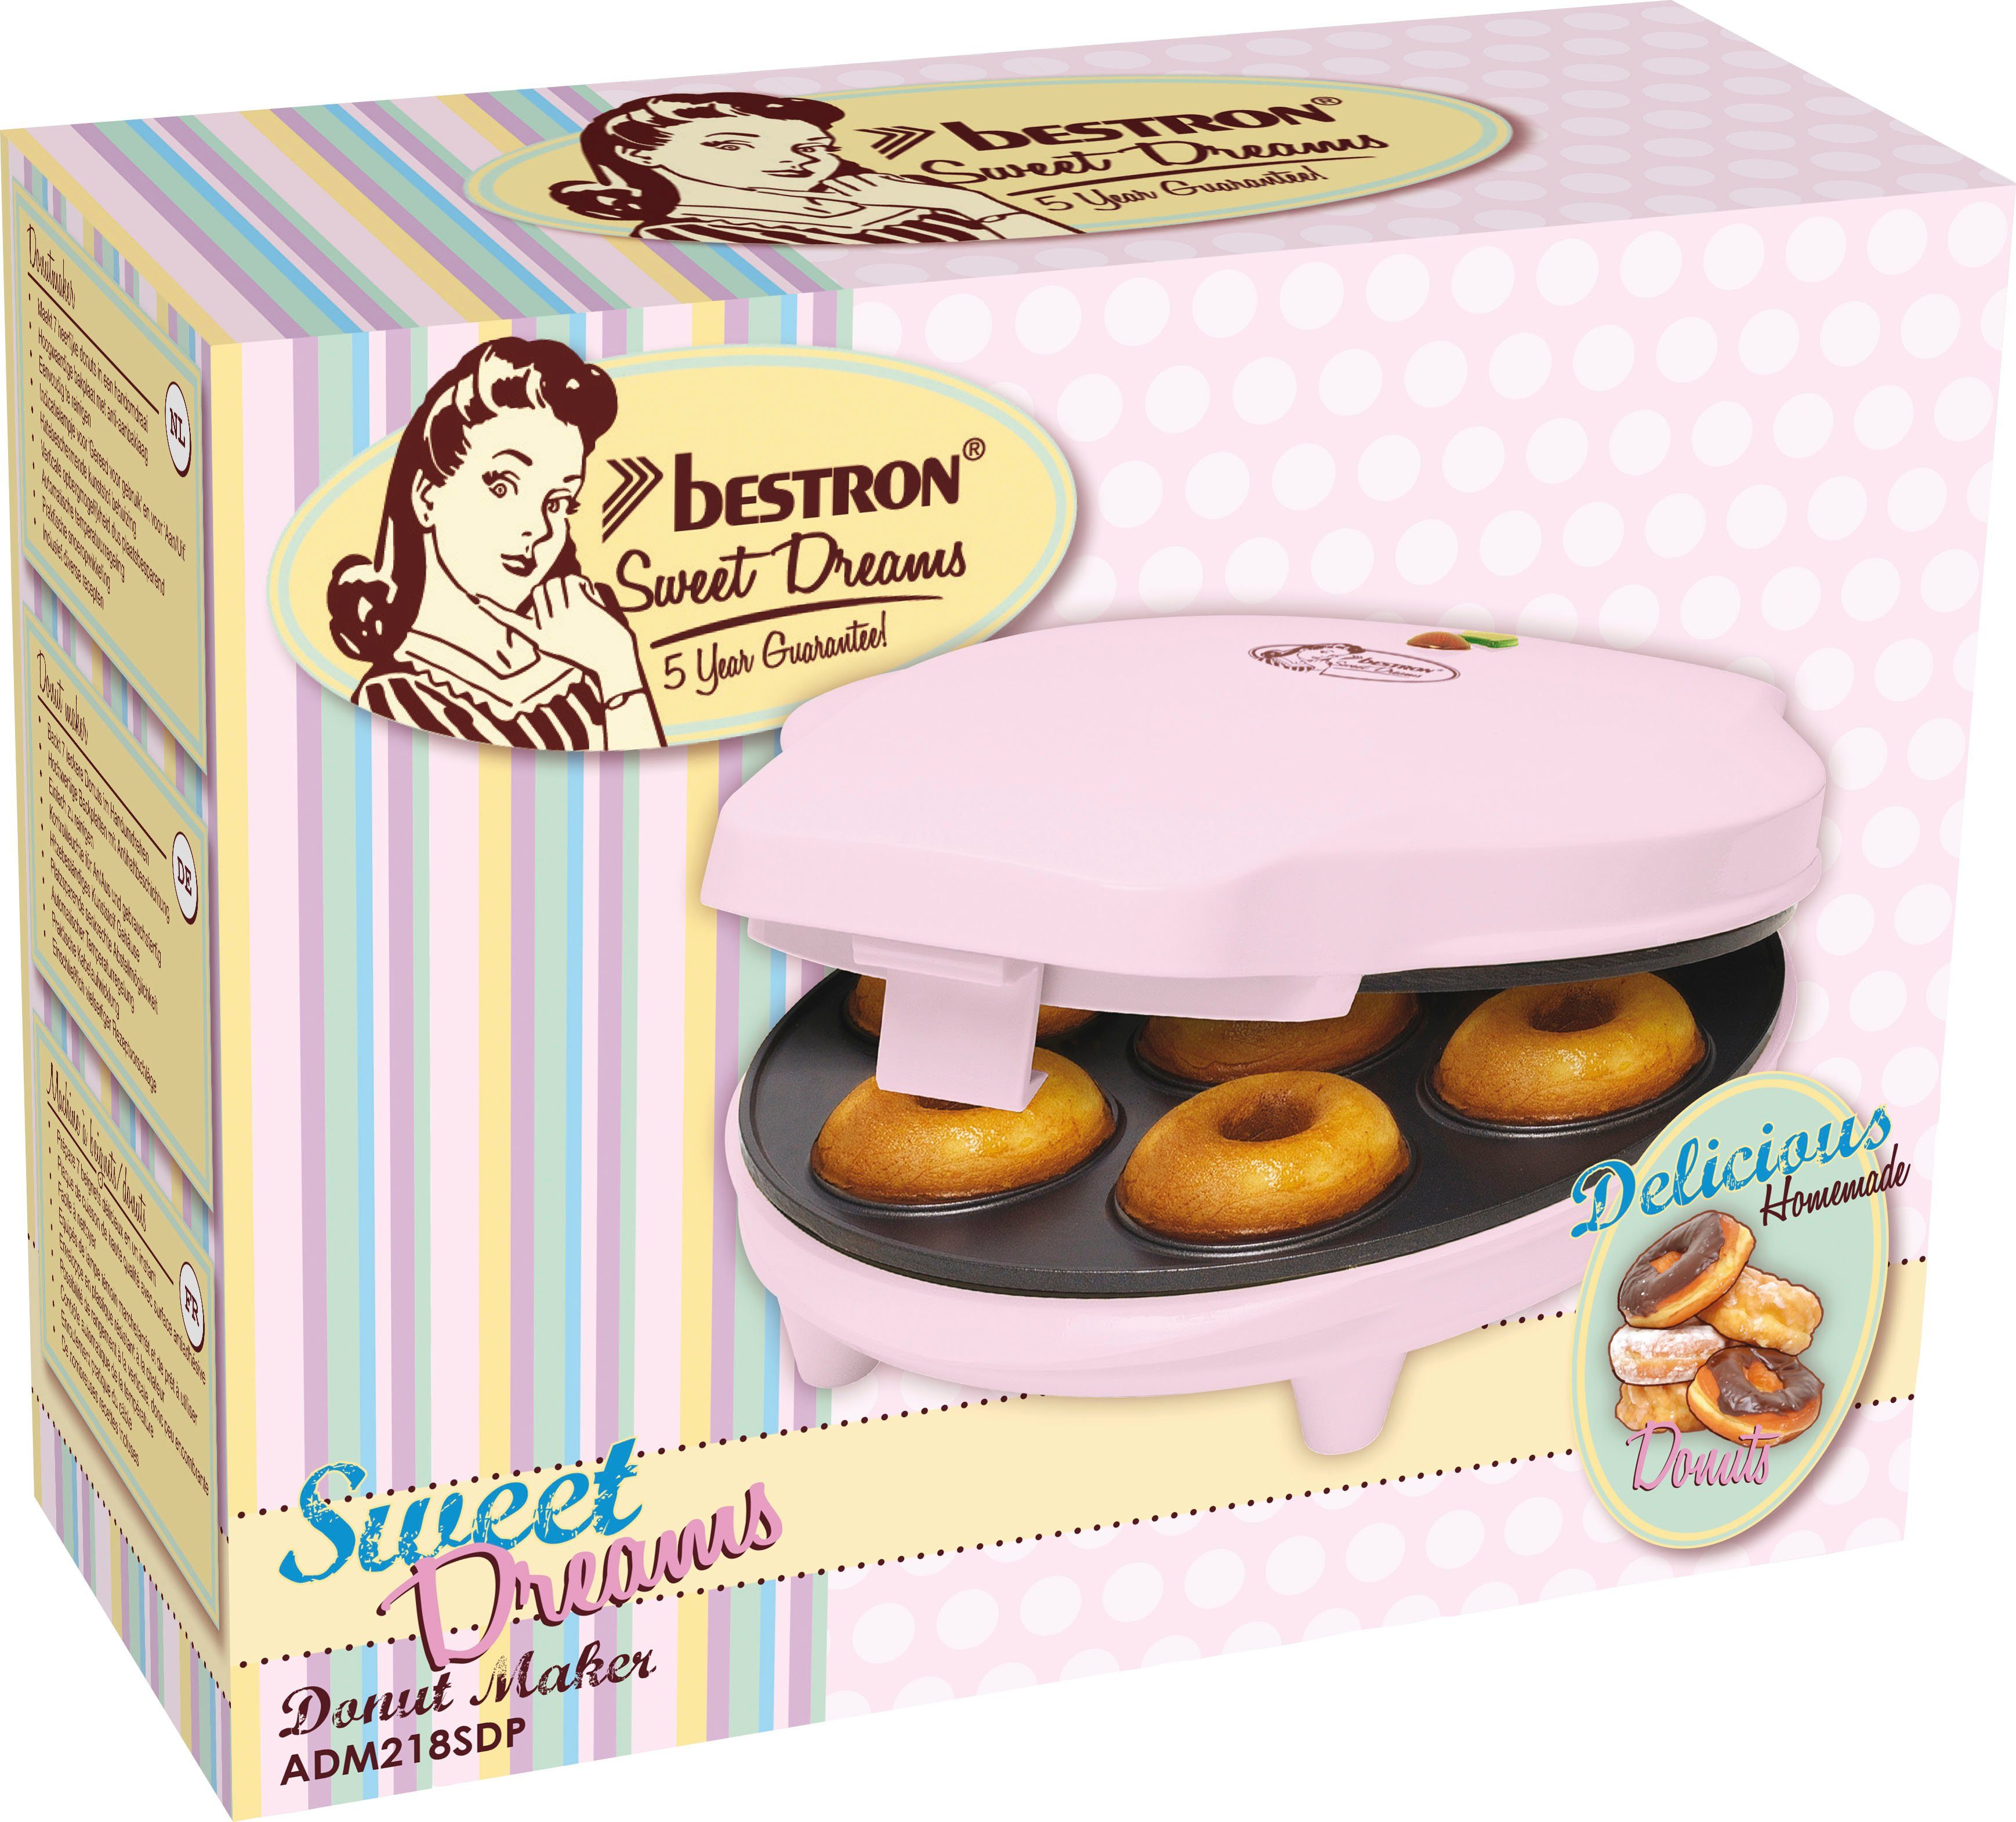 700 Waffeleisen Rosa Antihaftbeschichtung, Design, Sweet Donut-Maker ADM218SDP, W, bestron im Dreams, Retro